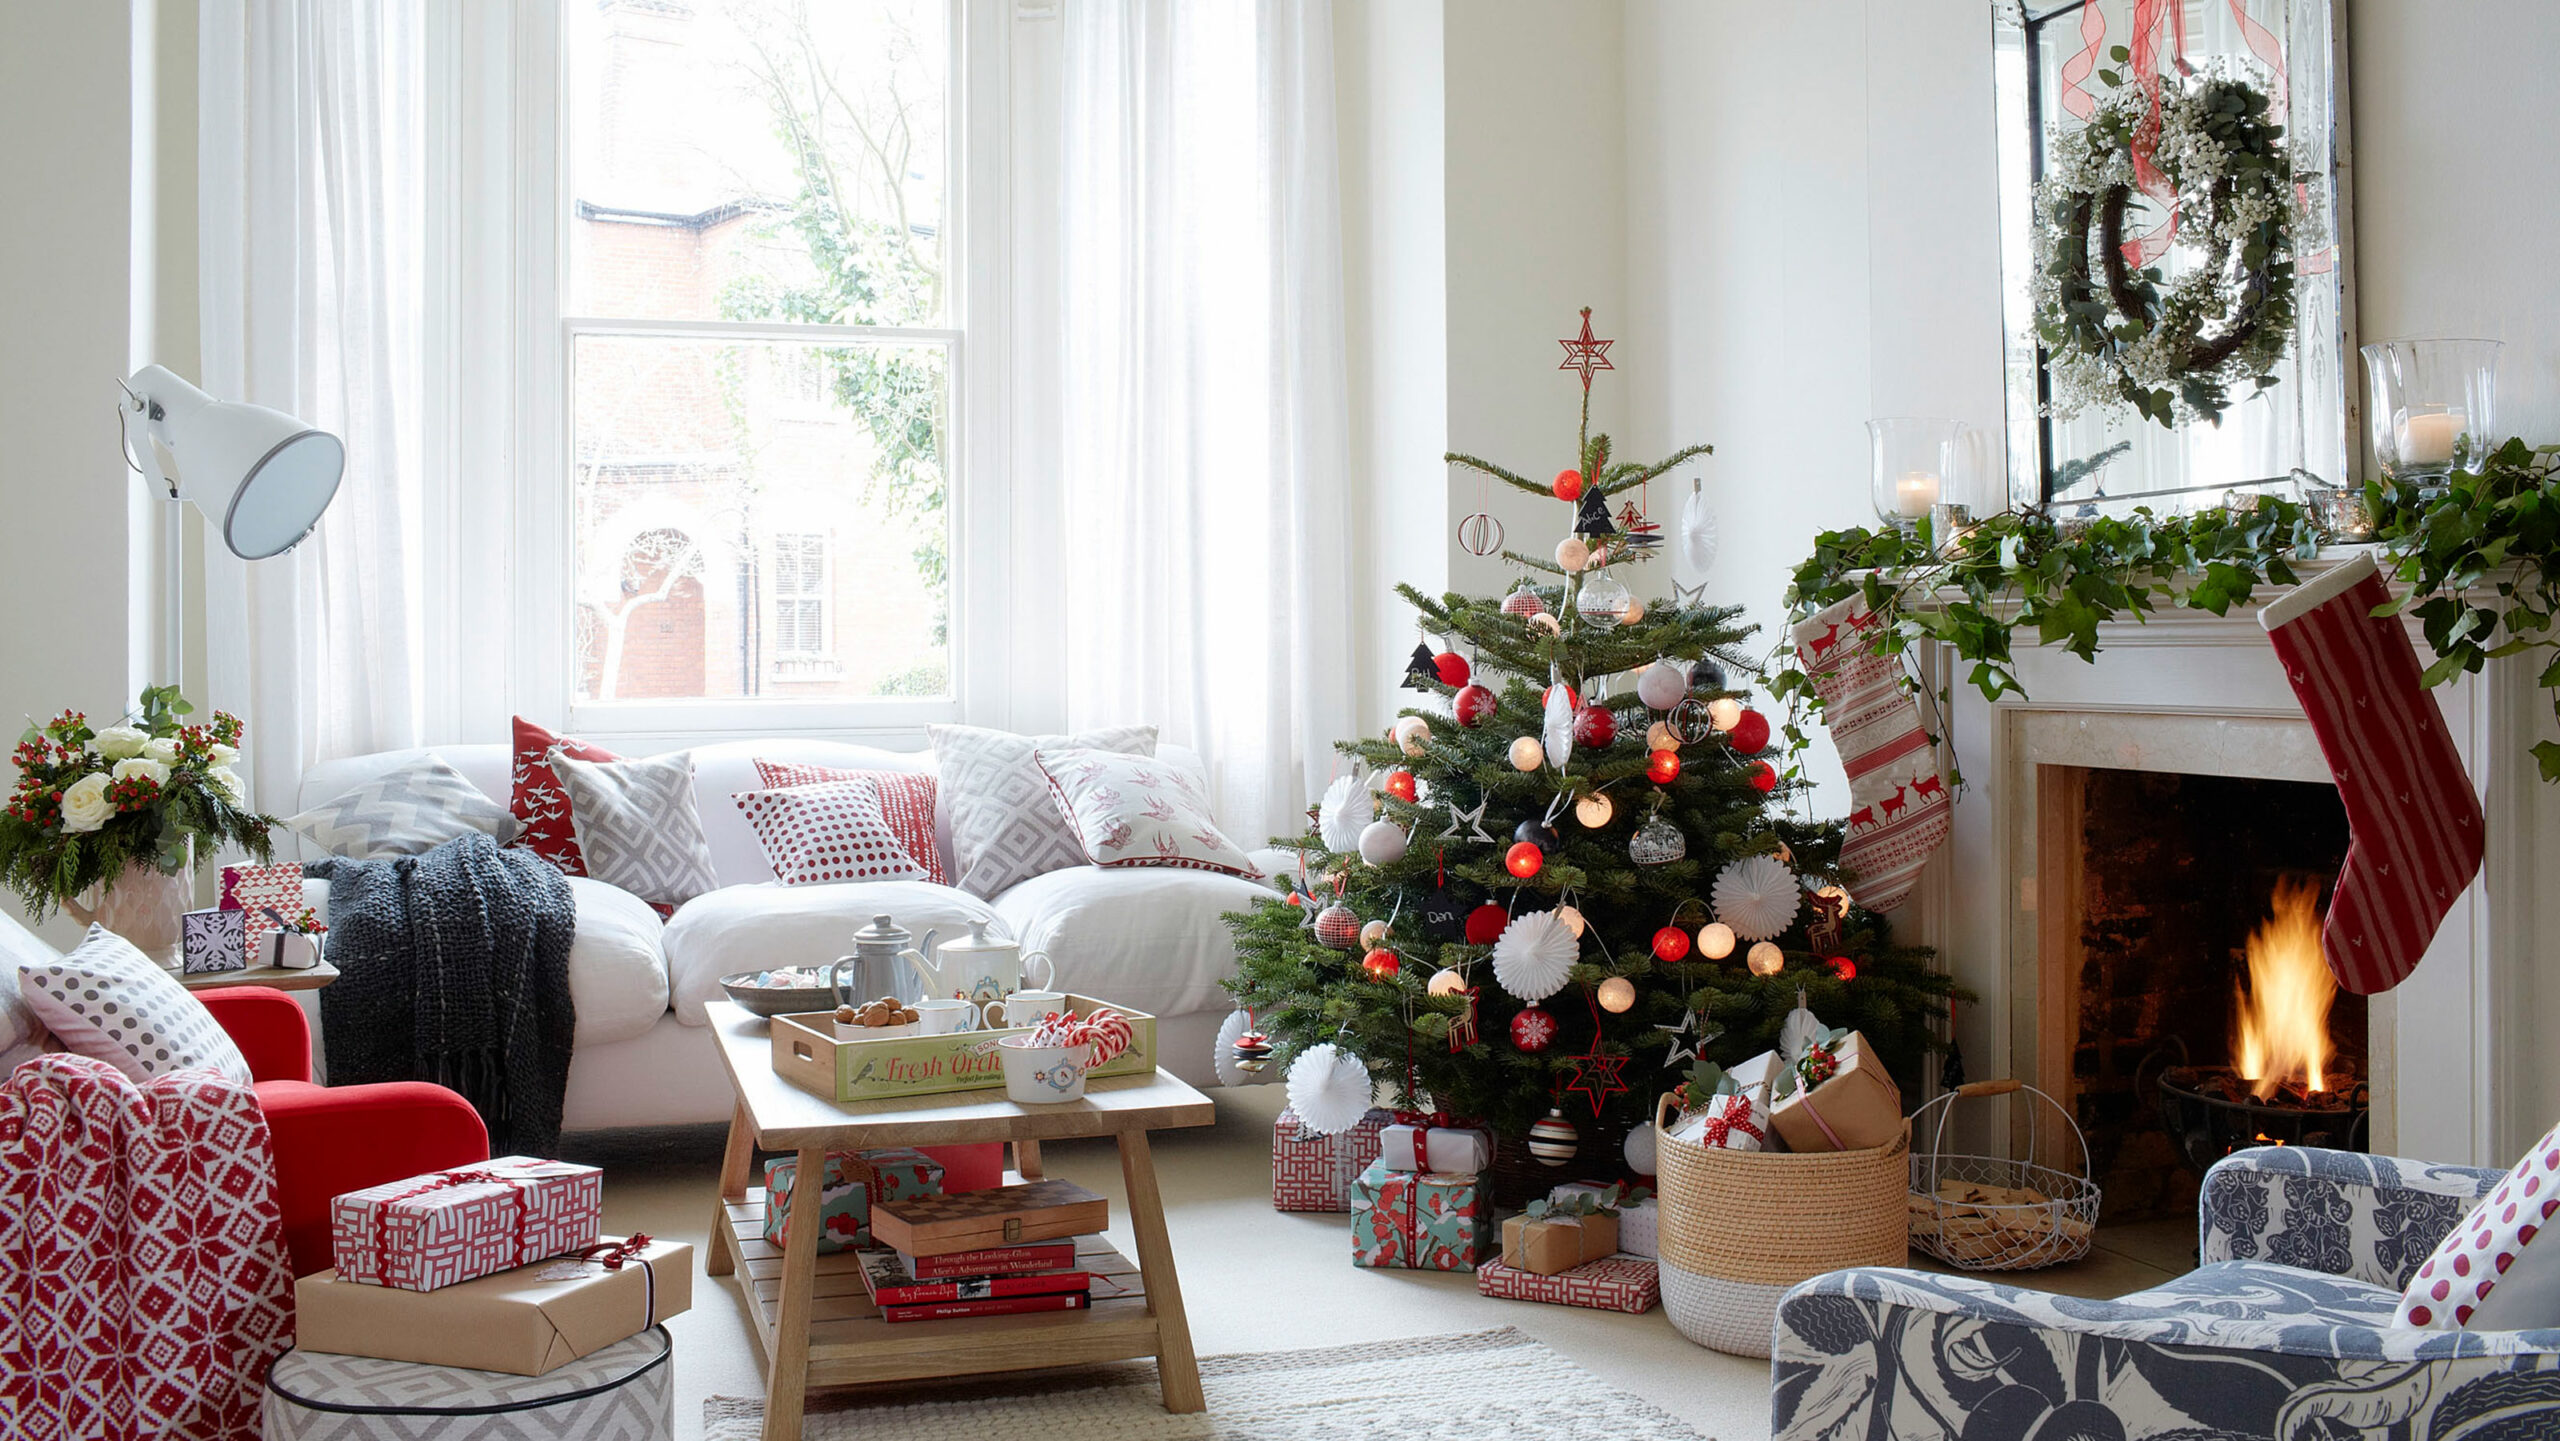 Creating a Winter Wonderland: Wholesale Christmas Decorating Ideas